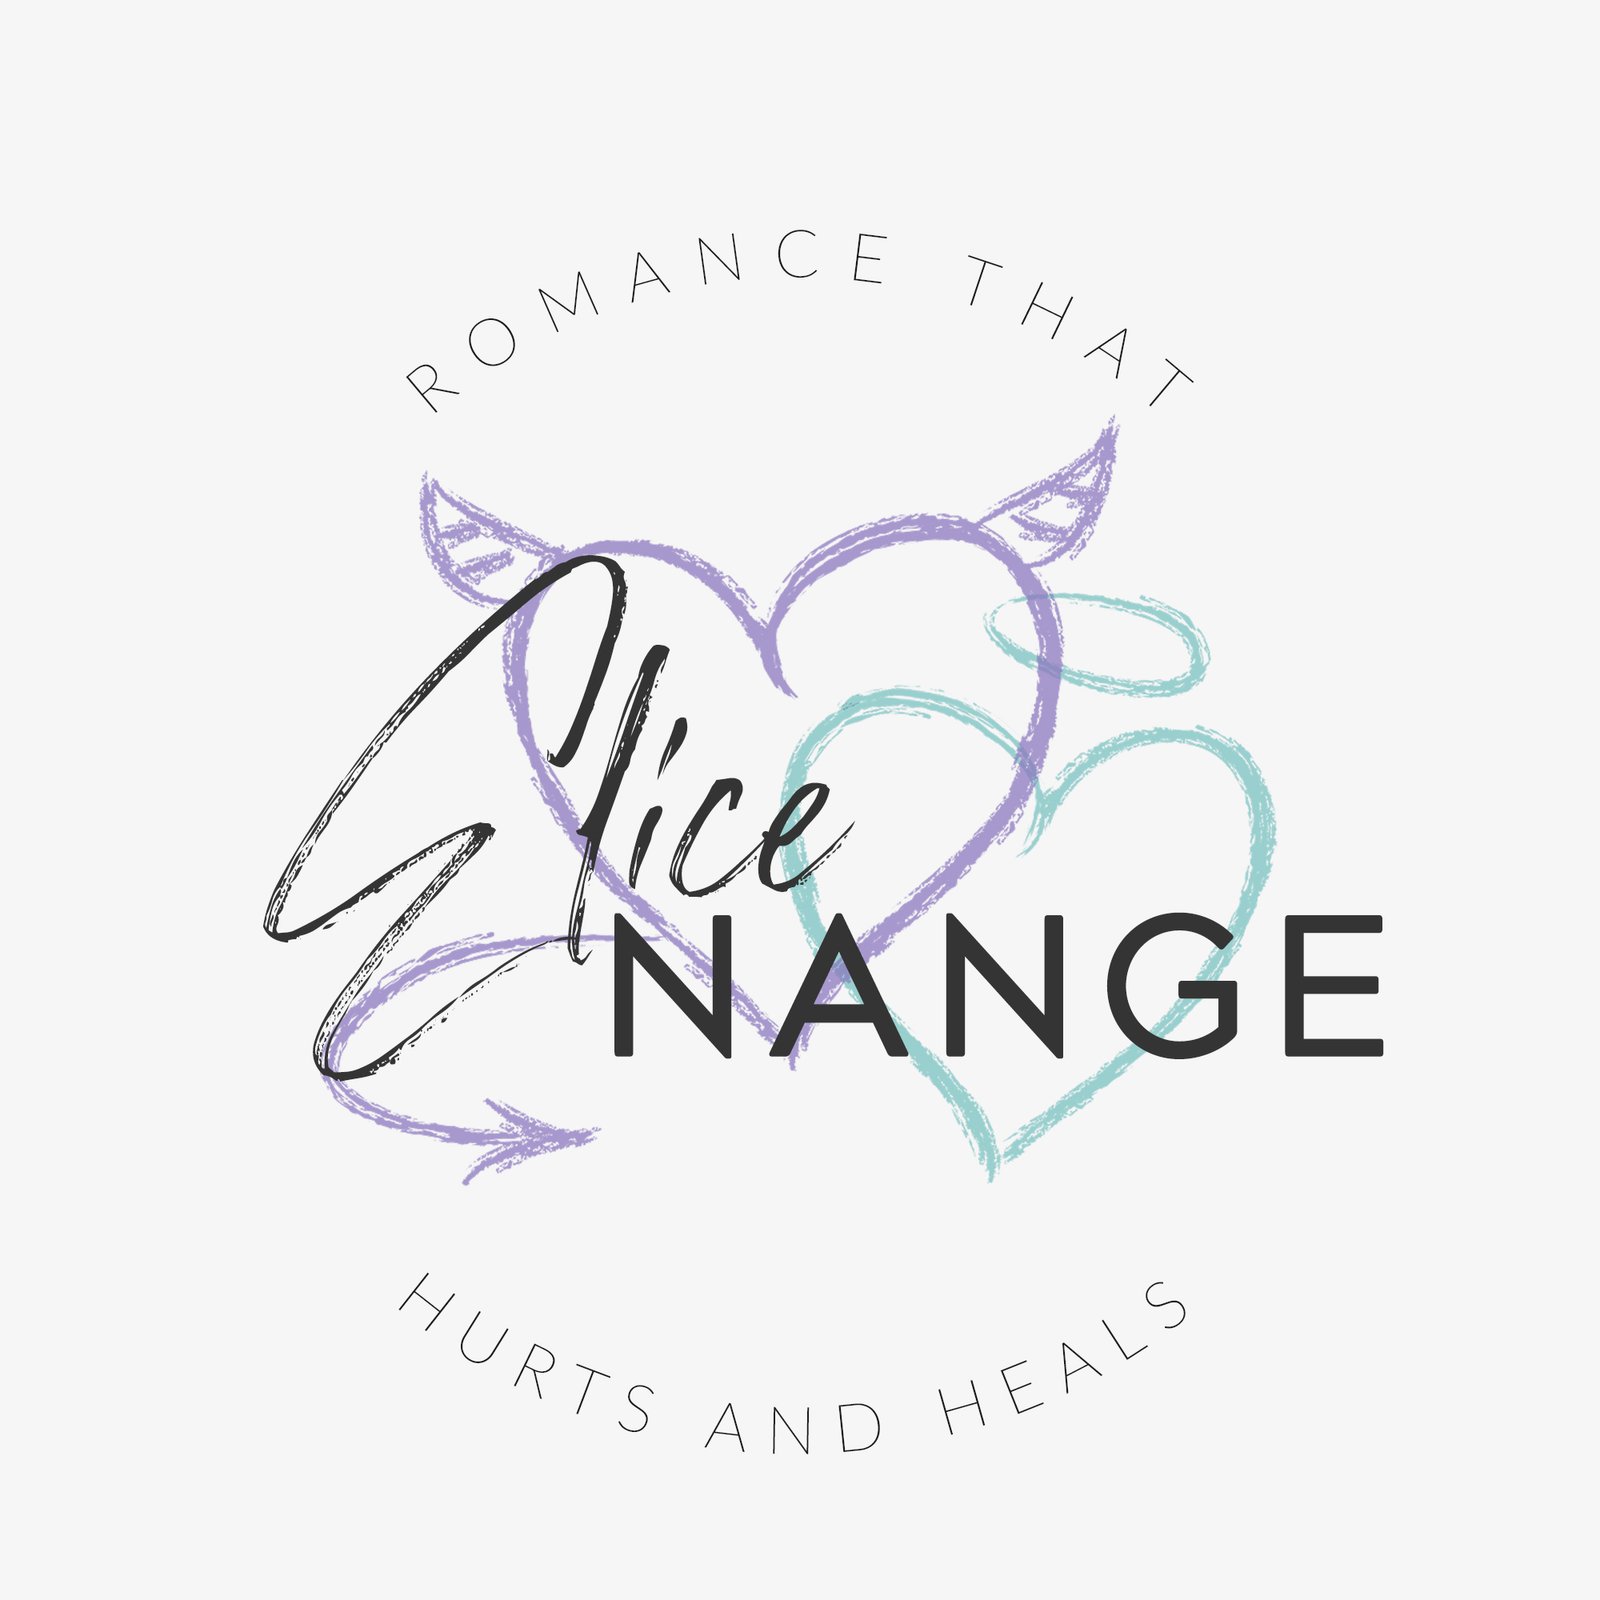 Elice Nange